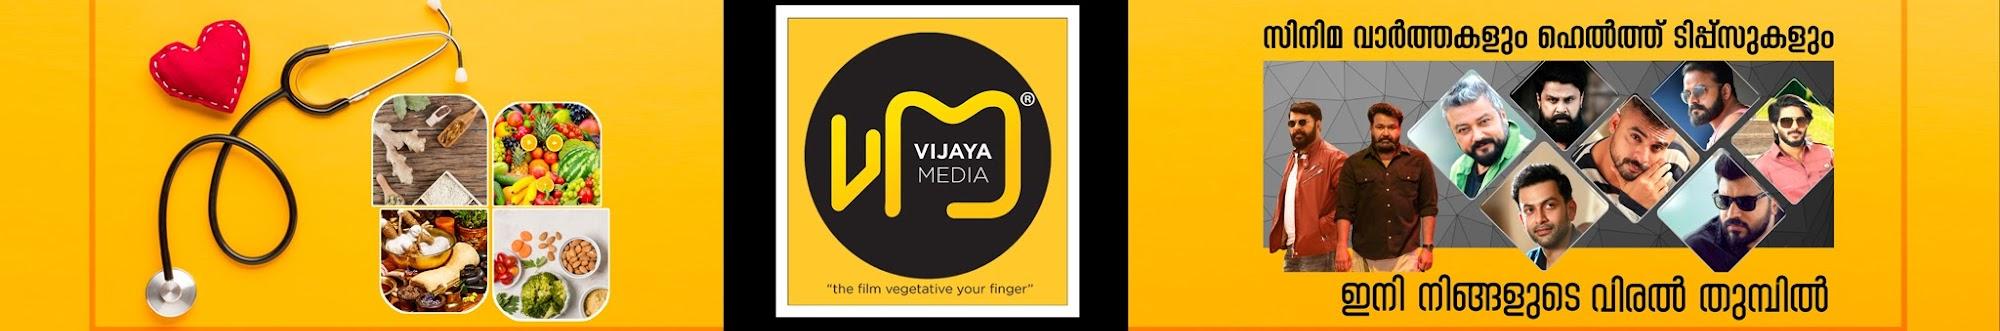 Vijaya Media